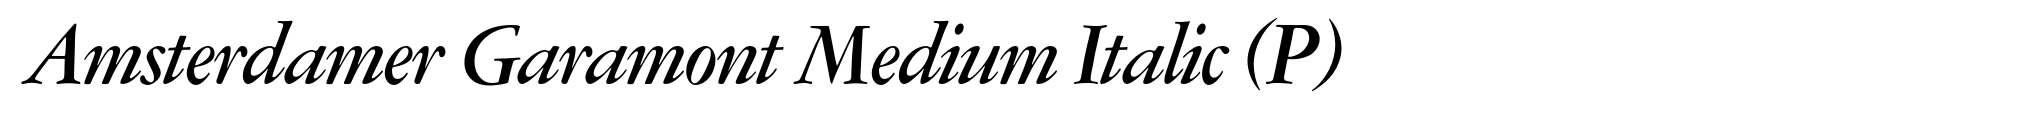 Amsterdamer Garamont Medium Italic (P) image